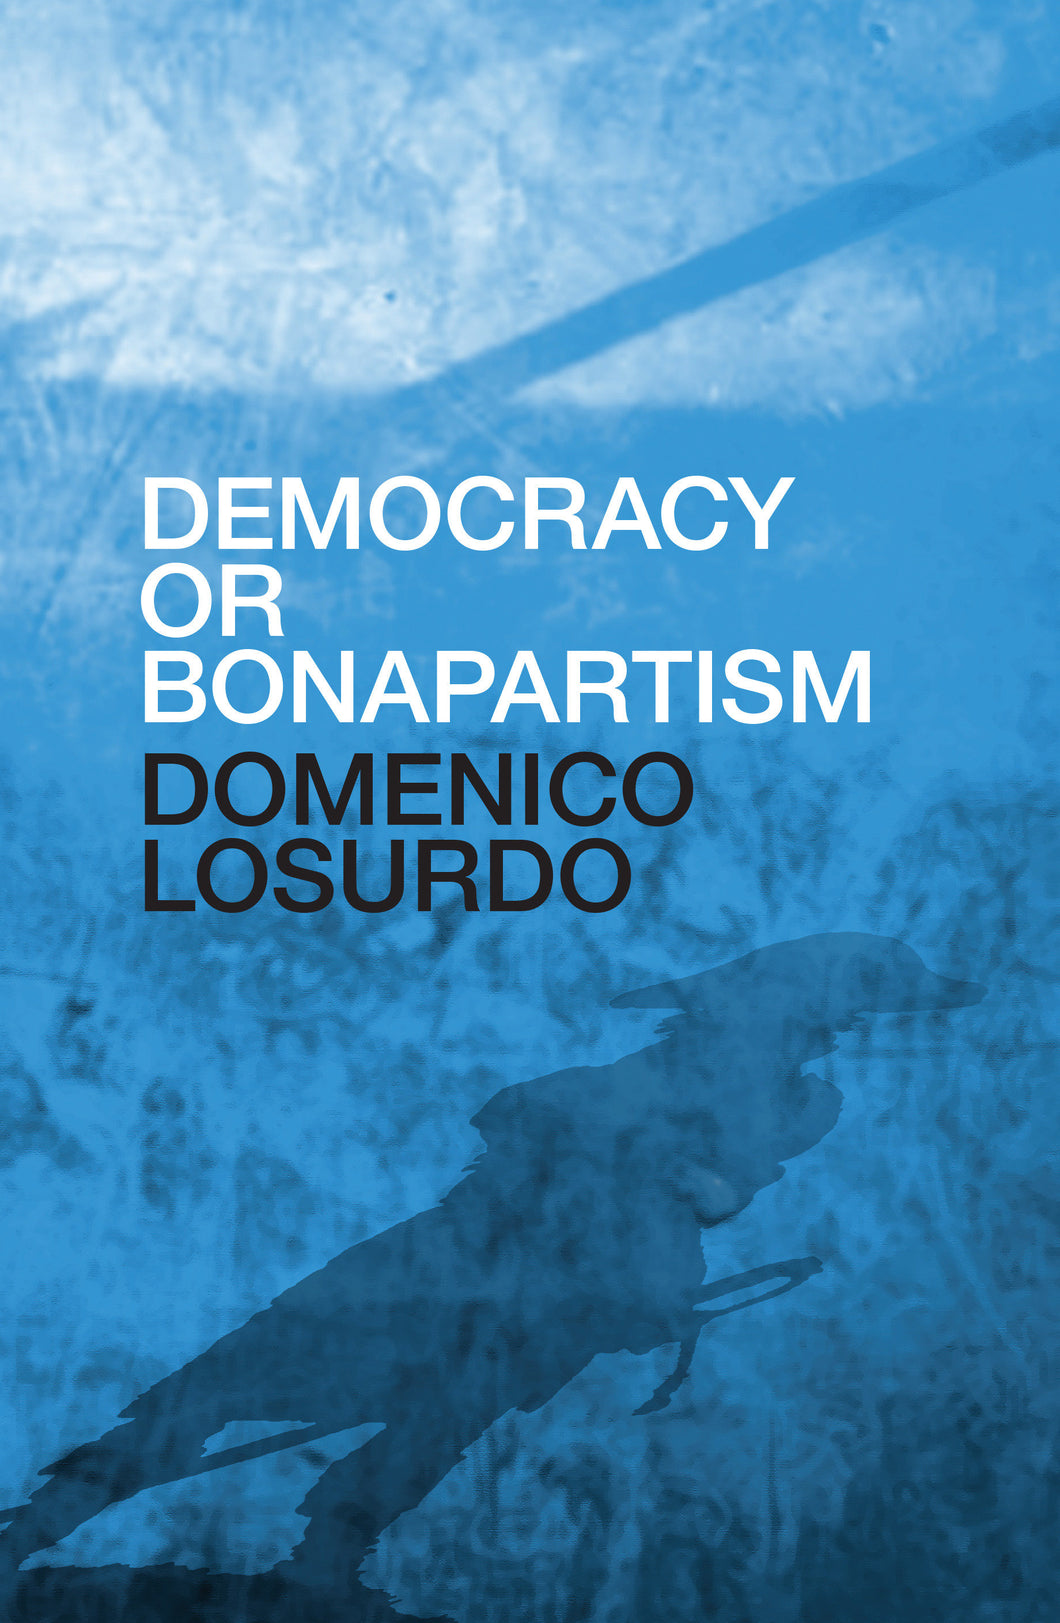 Democracy or Bonapartism : Two Centuries of War on Democracy